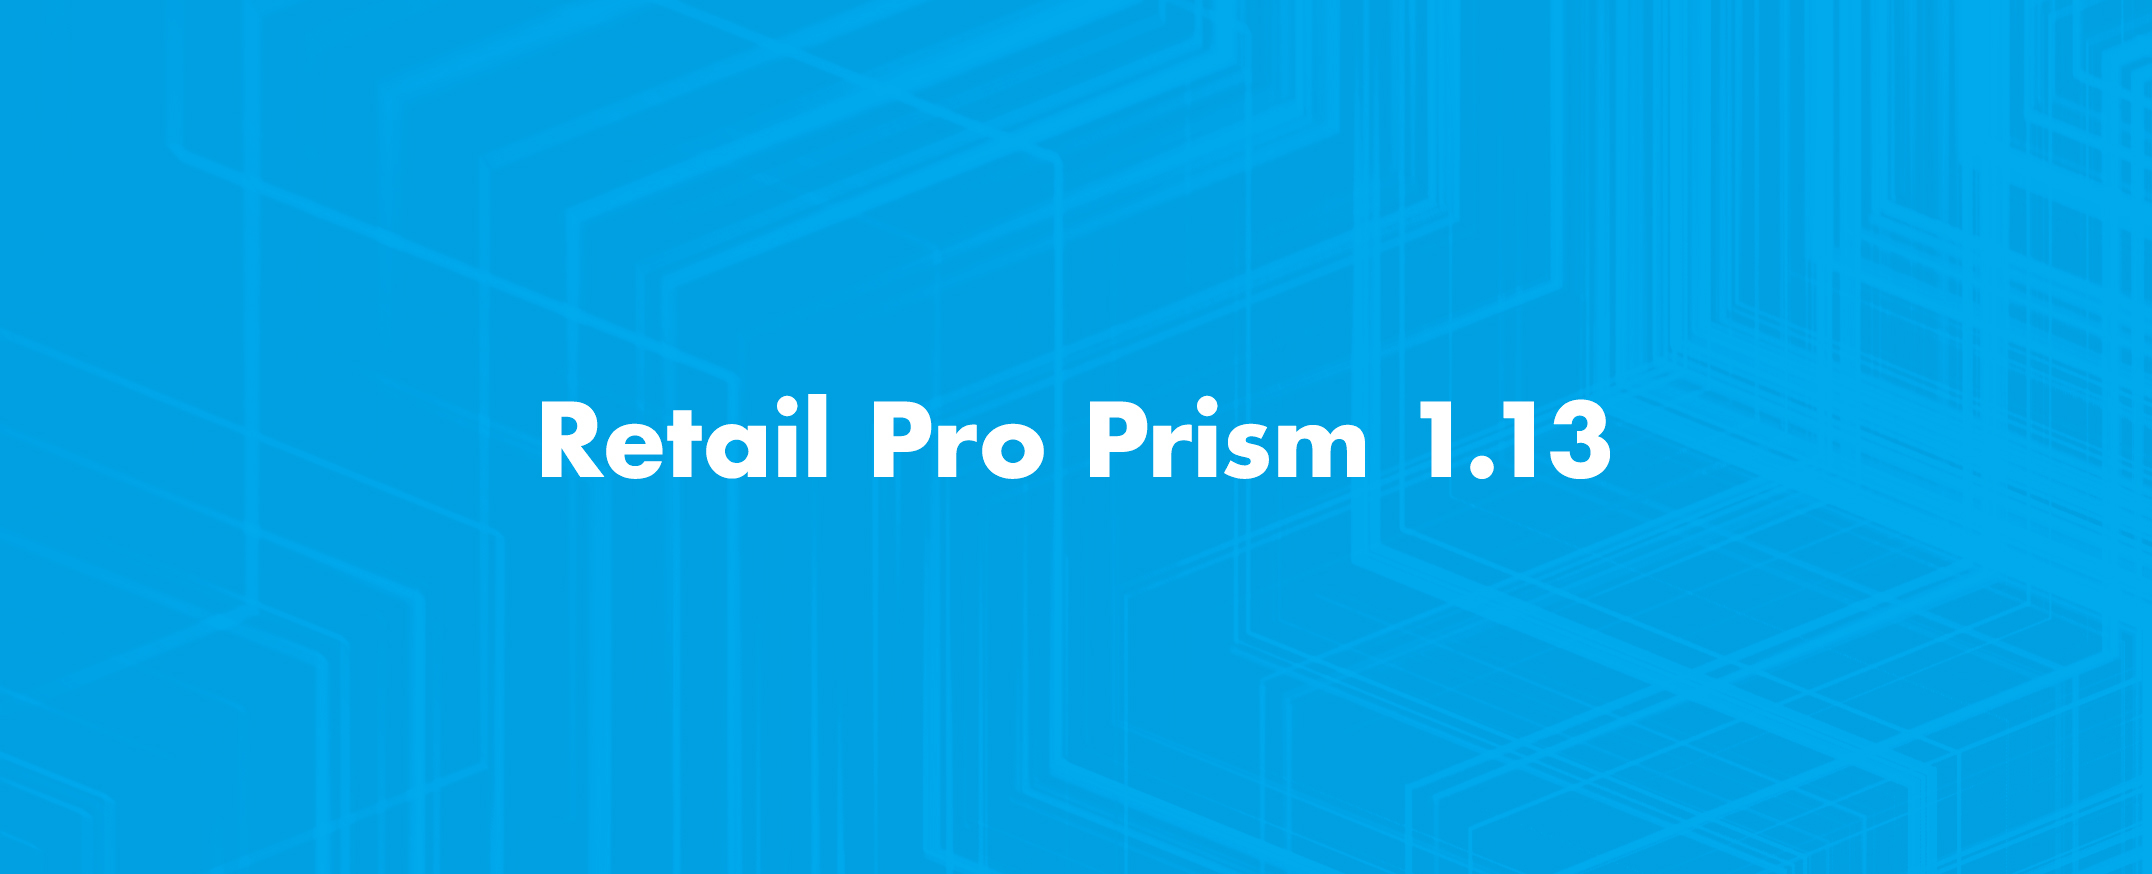 Retail-Pro-Prism-Releases-Retail-Pro-1.13